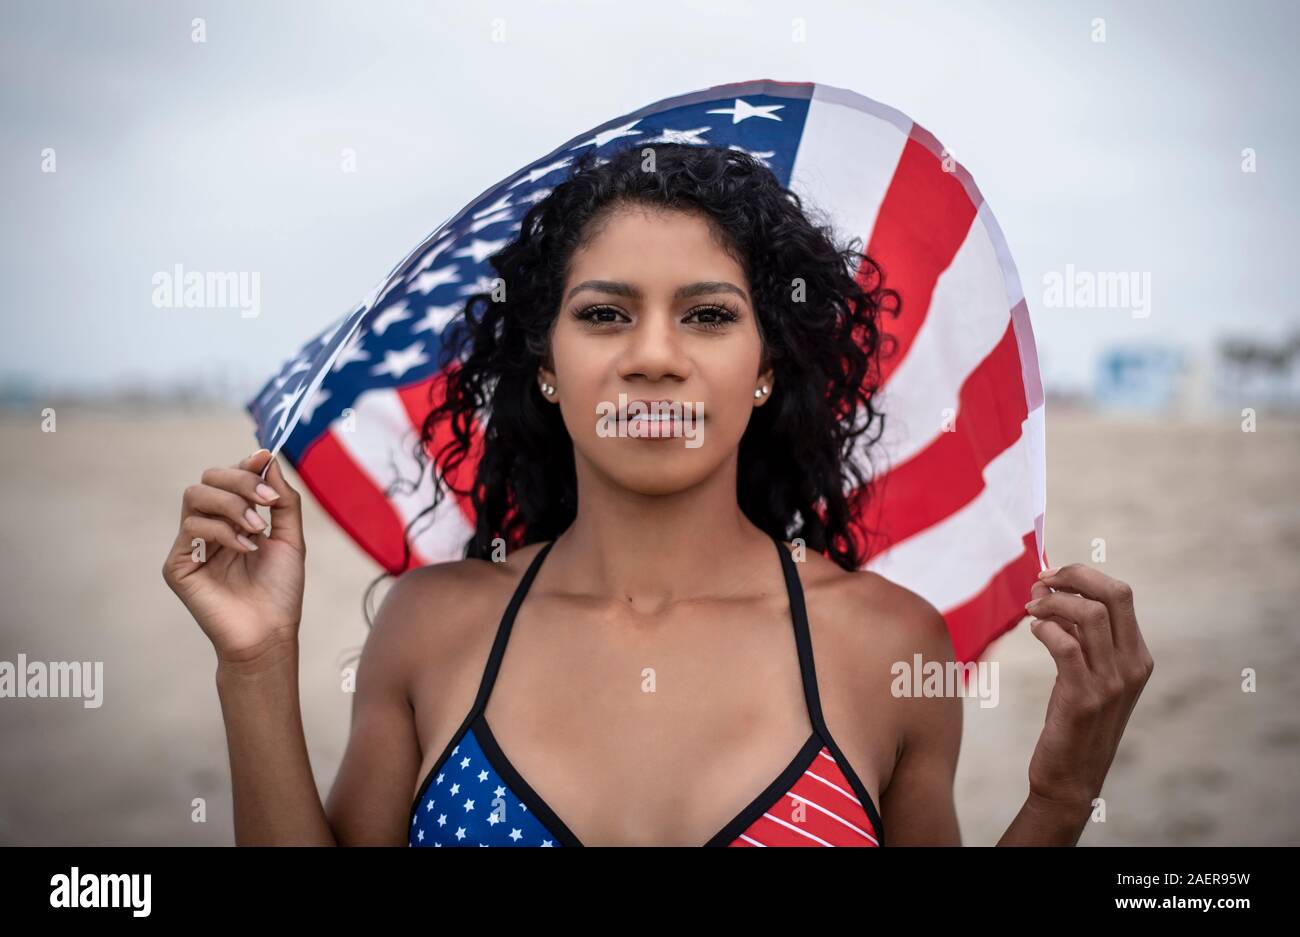 American flag bikini hi-res stock photography and images - Alamy